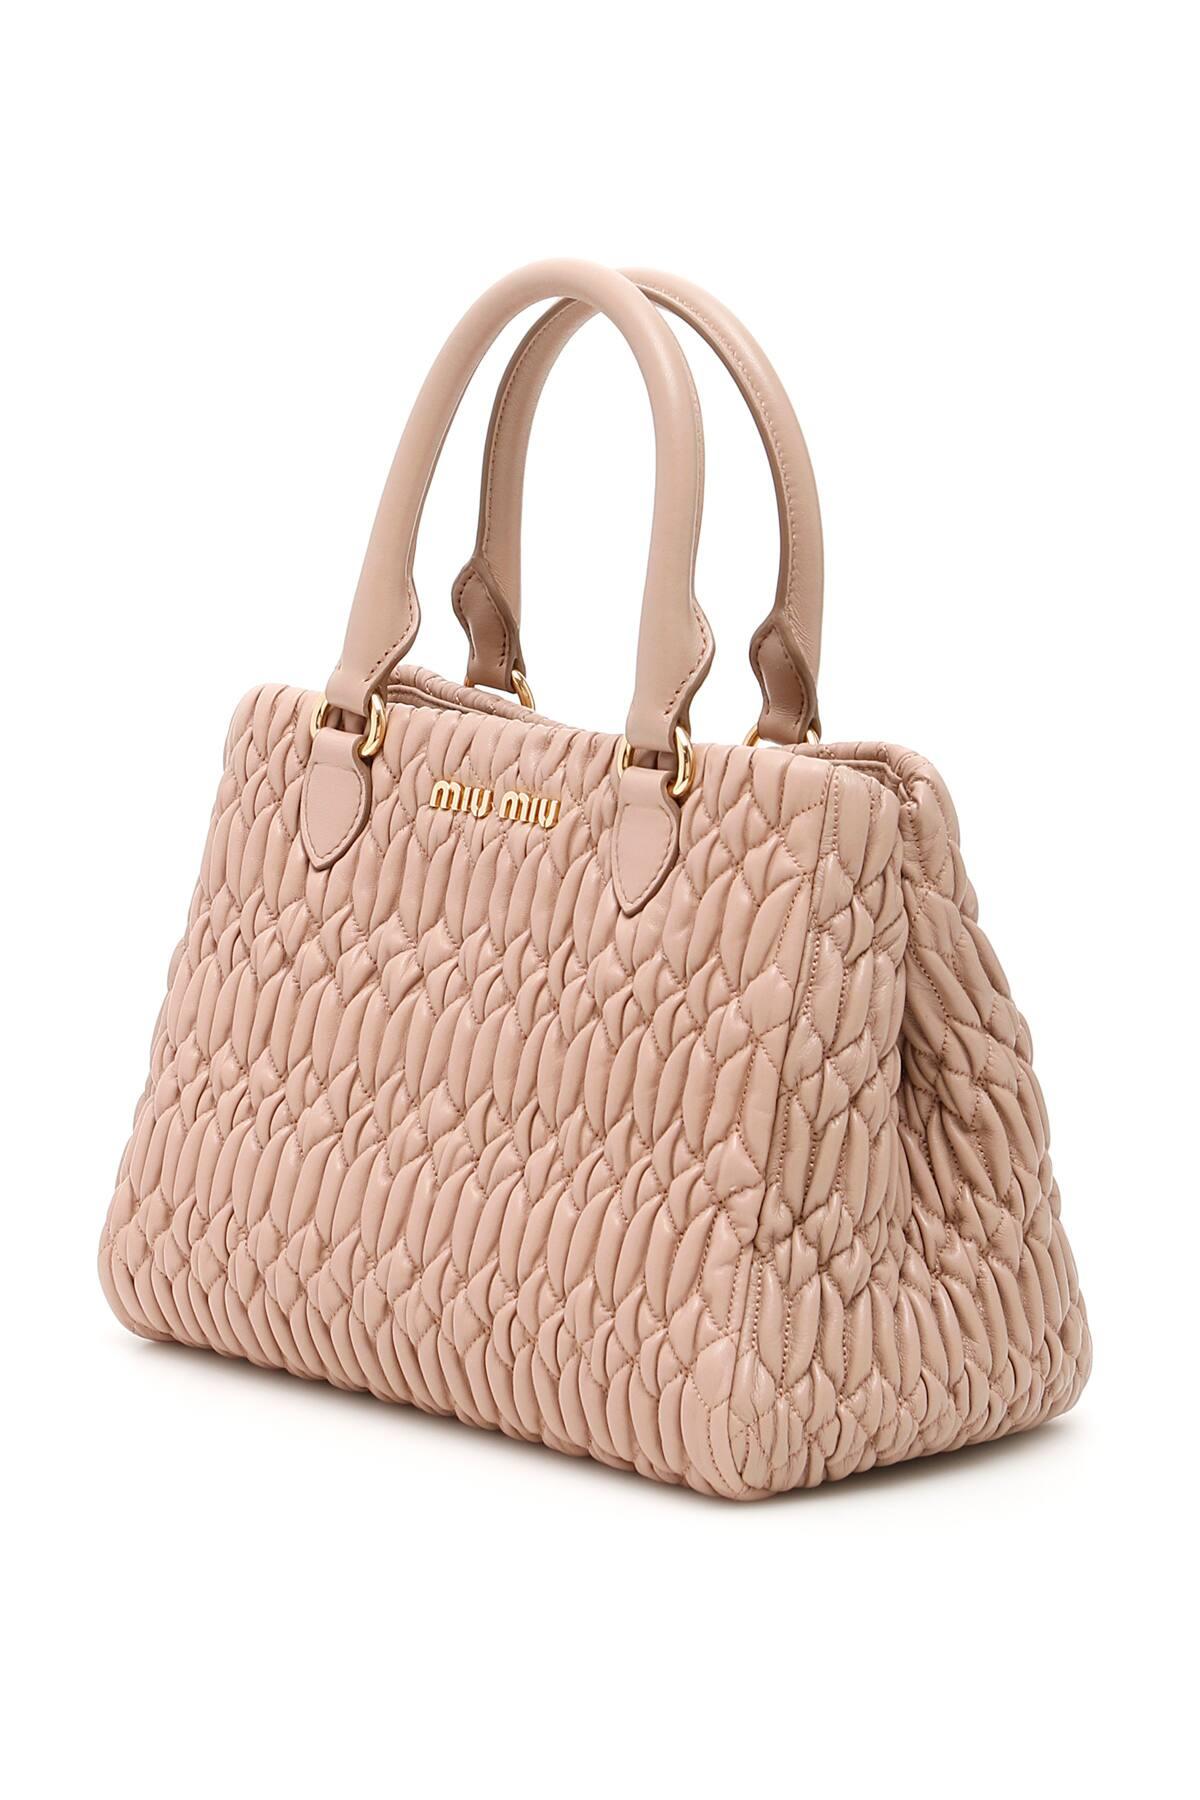 Miu Miu Leather Miu Crystal Cloquet Nappa Bag in Pink,Beige (Pink) - Lyst